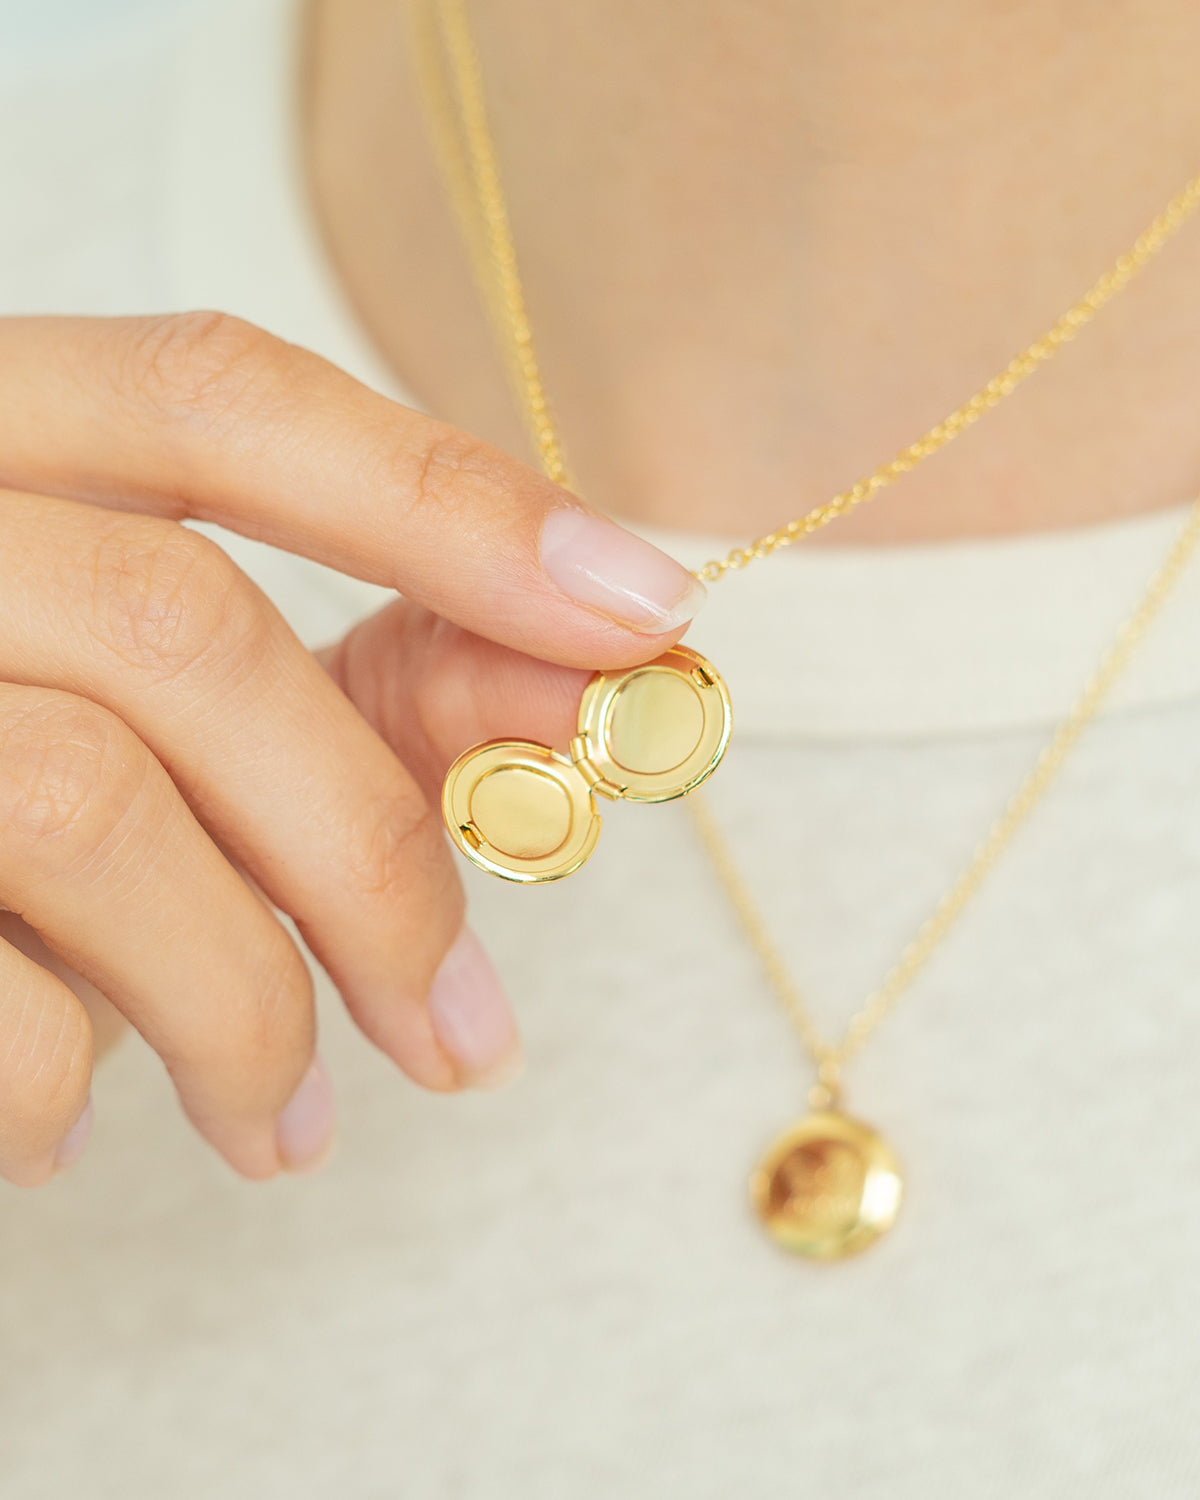 Personalised Rose Gold Bracelet With Circular Pendant | GettingPersonal